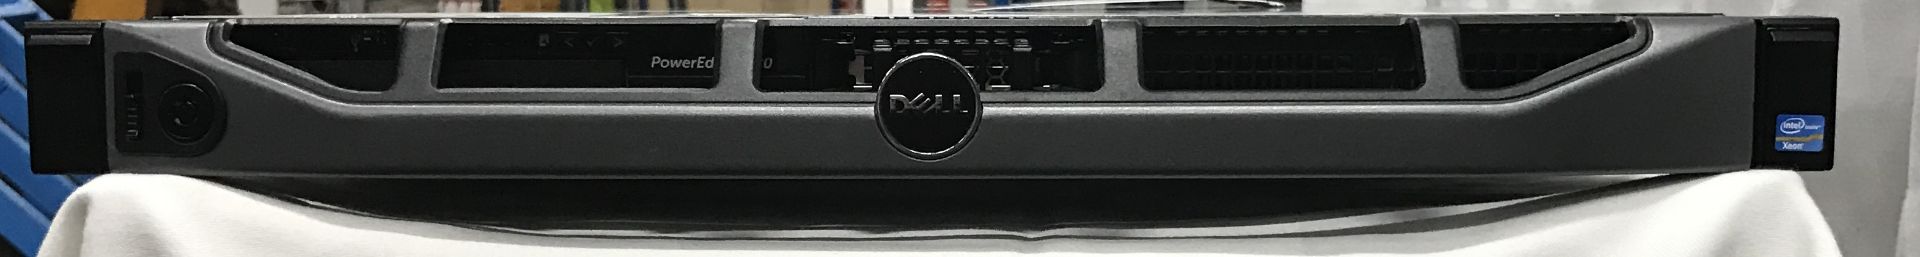 Dell Poweredge R620 Server - Image 3 of 4